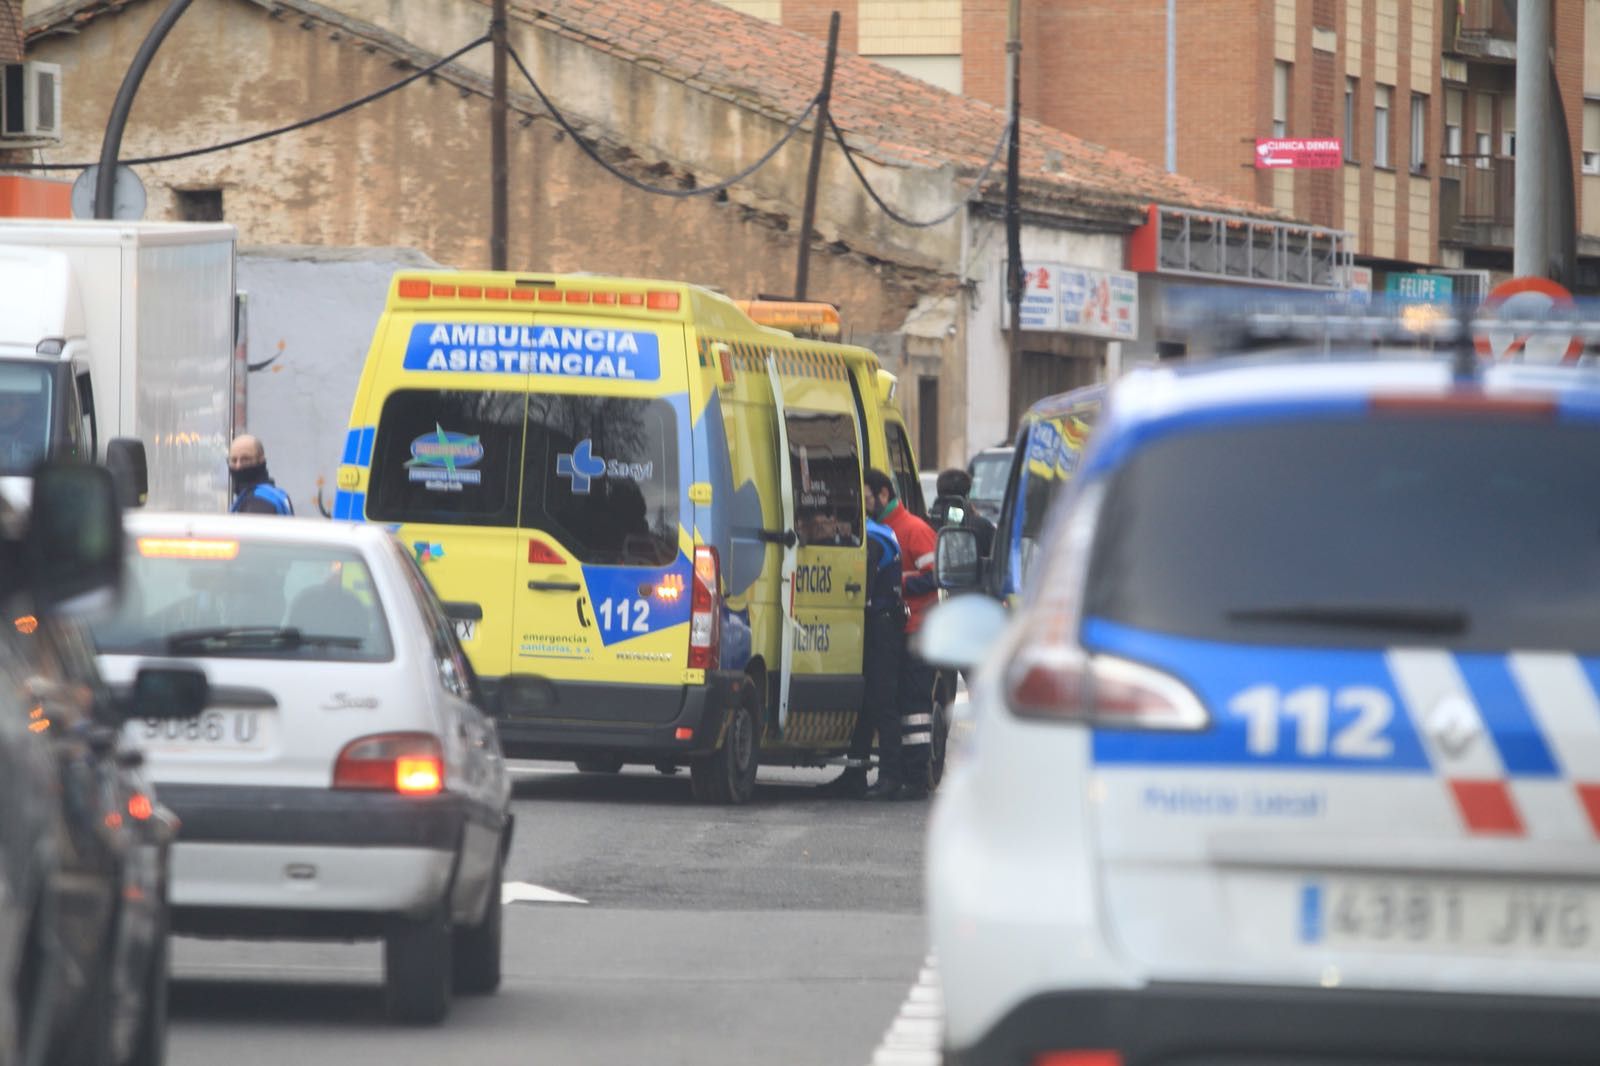  Ambulancia Policía Local carretera Ledesma (9) 